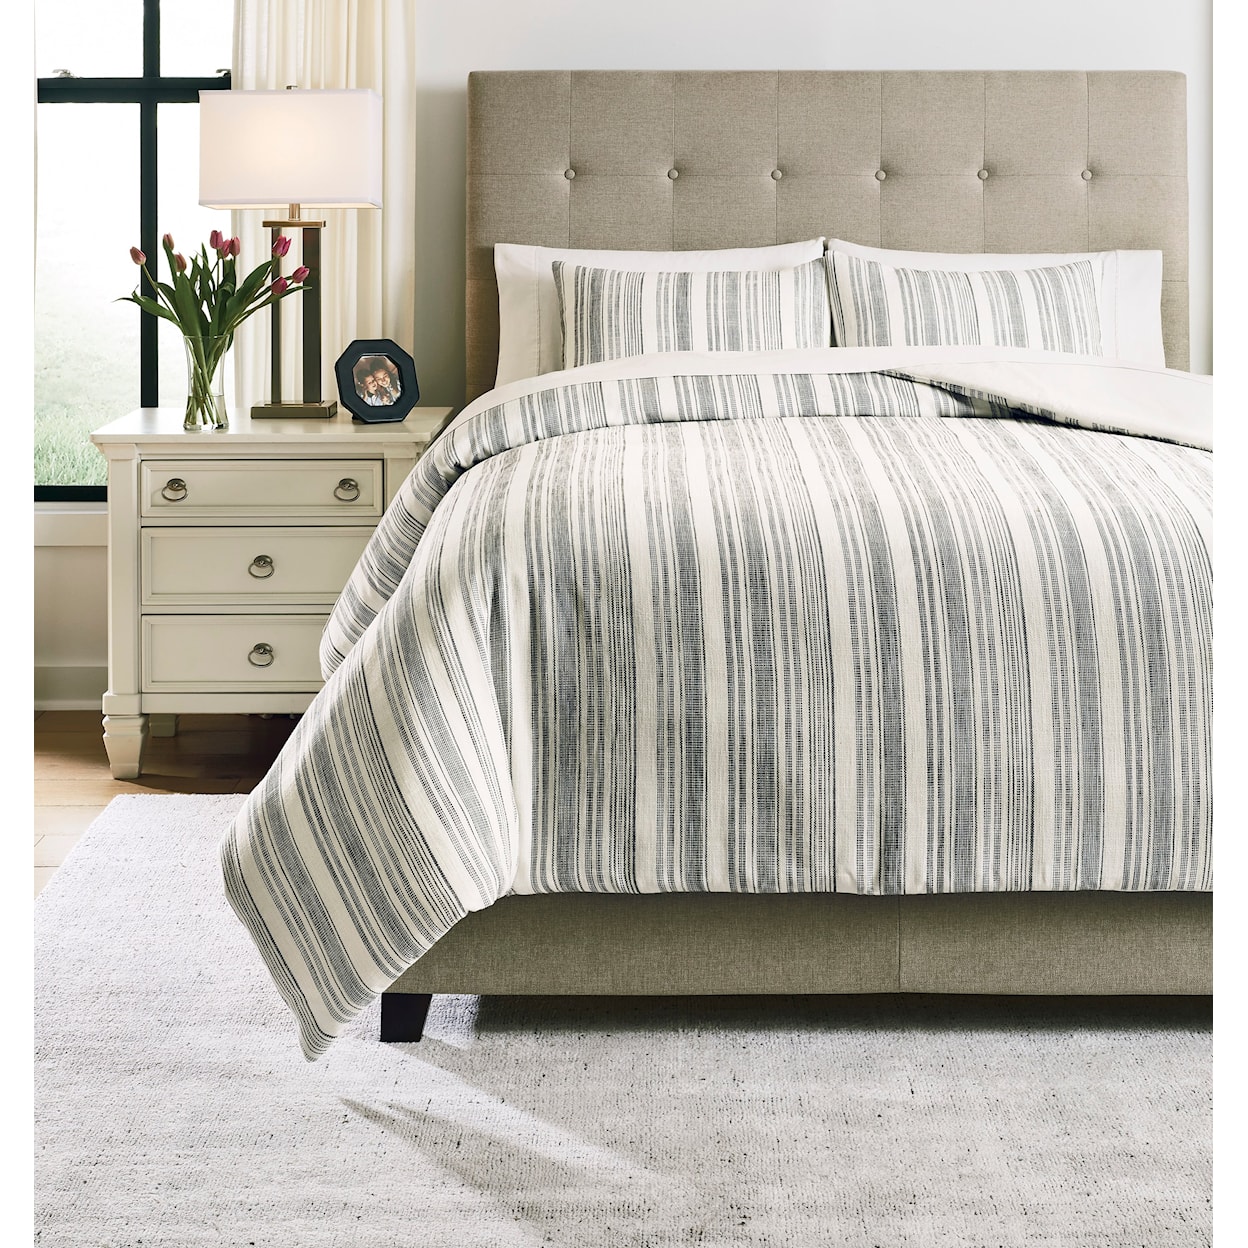 Ashley Furniture Signature Design Bedding Sets Reidler Queen Comforter Set